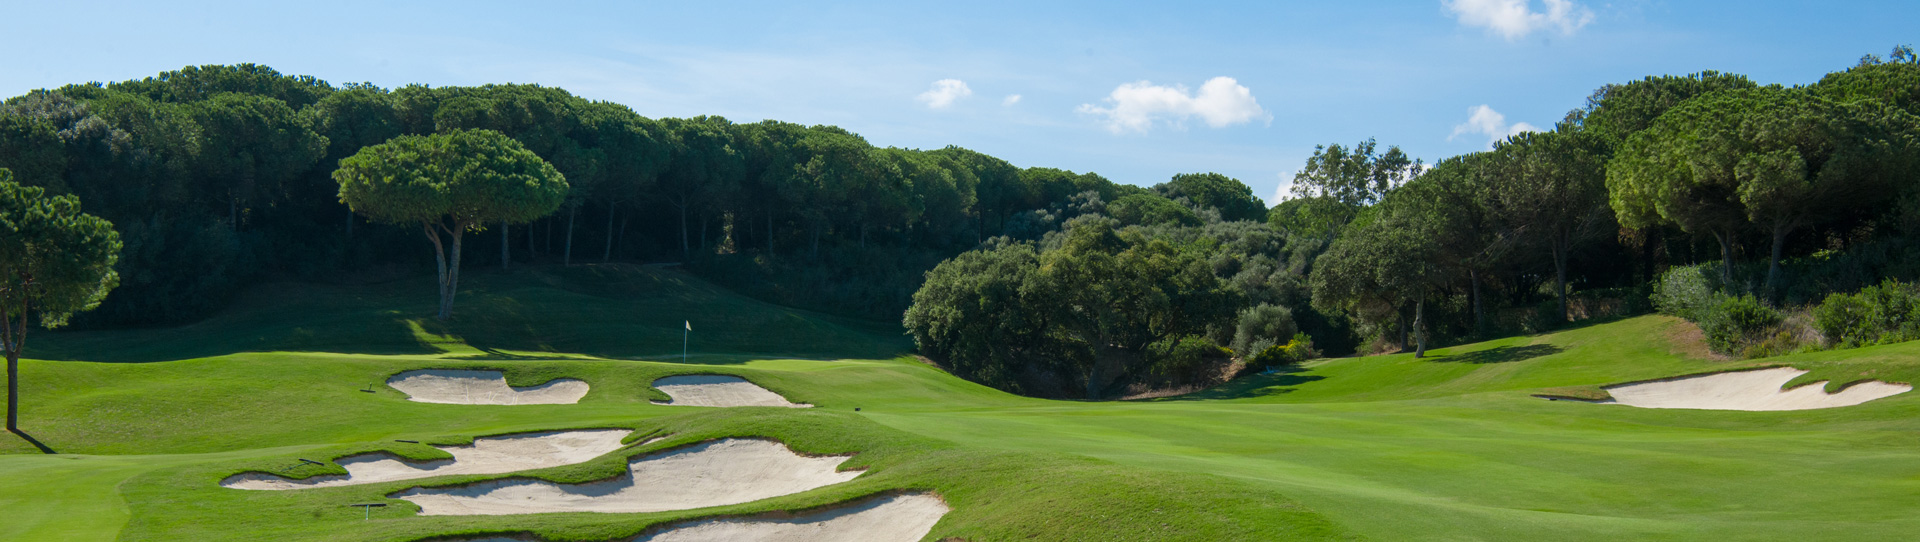 Spain golf courses - La Reserva at Sotogrande - Photo 3